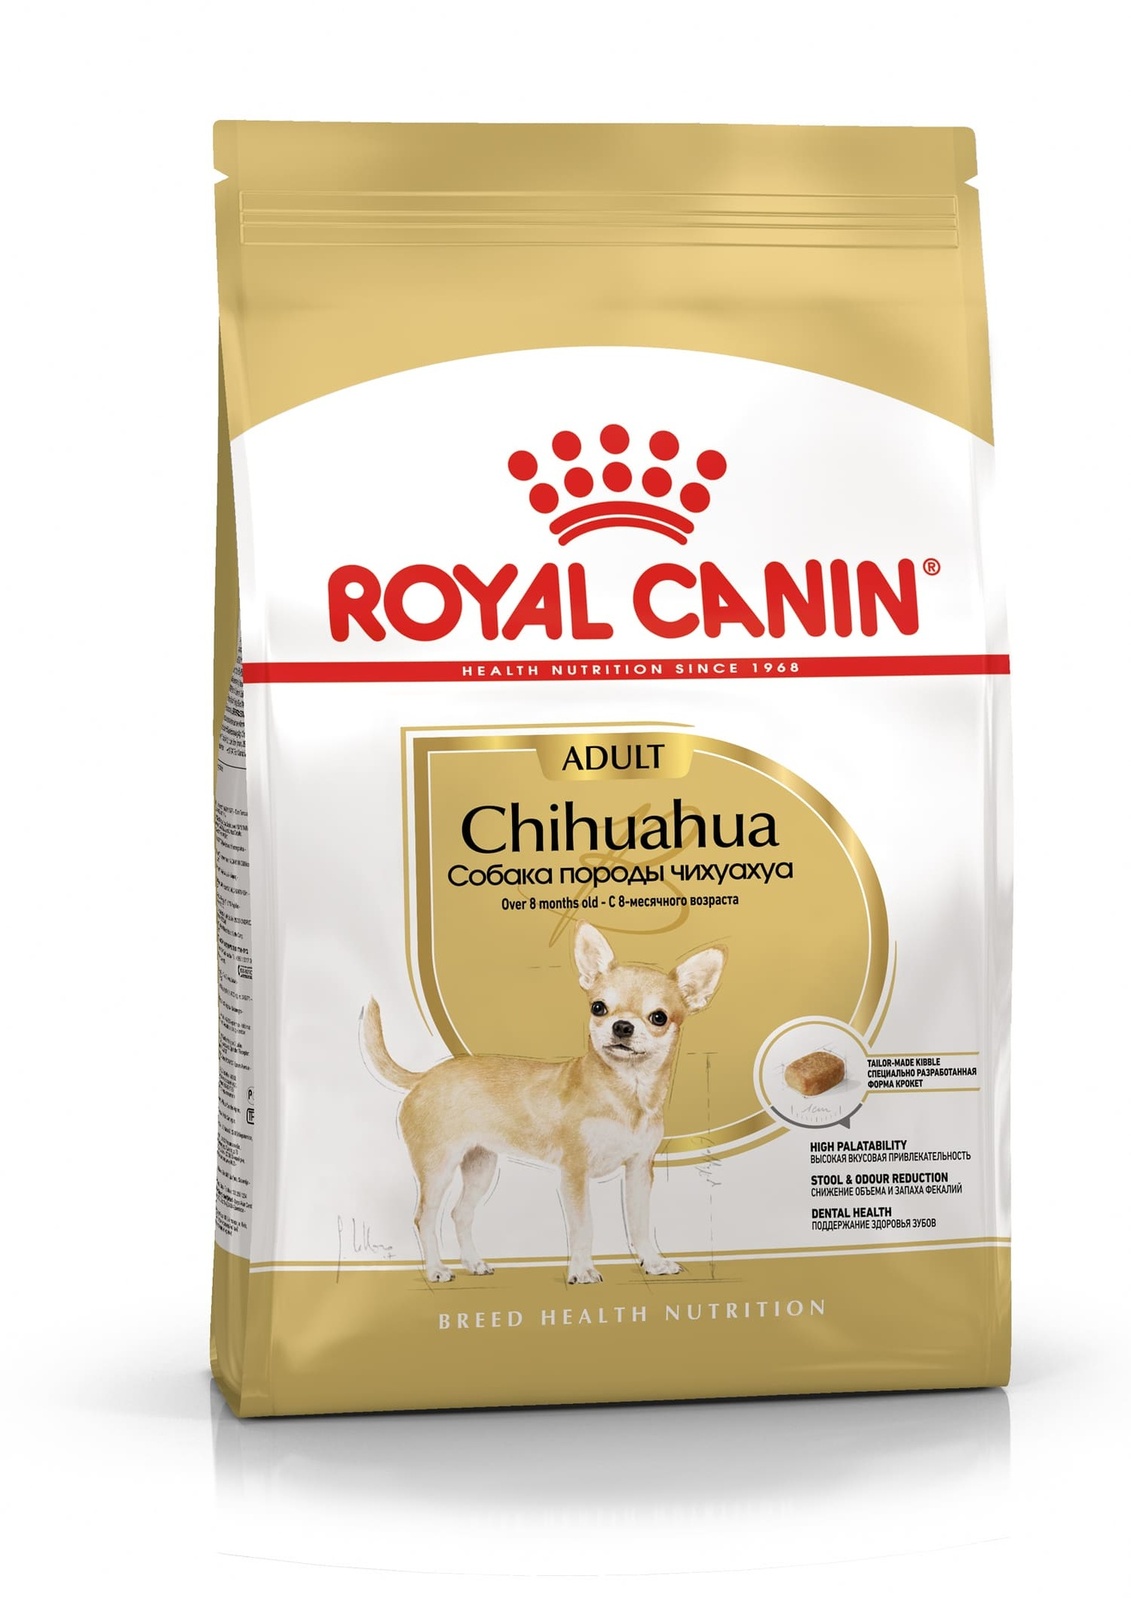 Royal Canin Royal Canin сухой корм для чихуахуа с 8 месяцев (3 кг) royal canin royal canin сухой корм для чихуахуа с 8 месяцев 1 5 кг